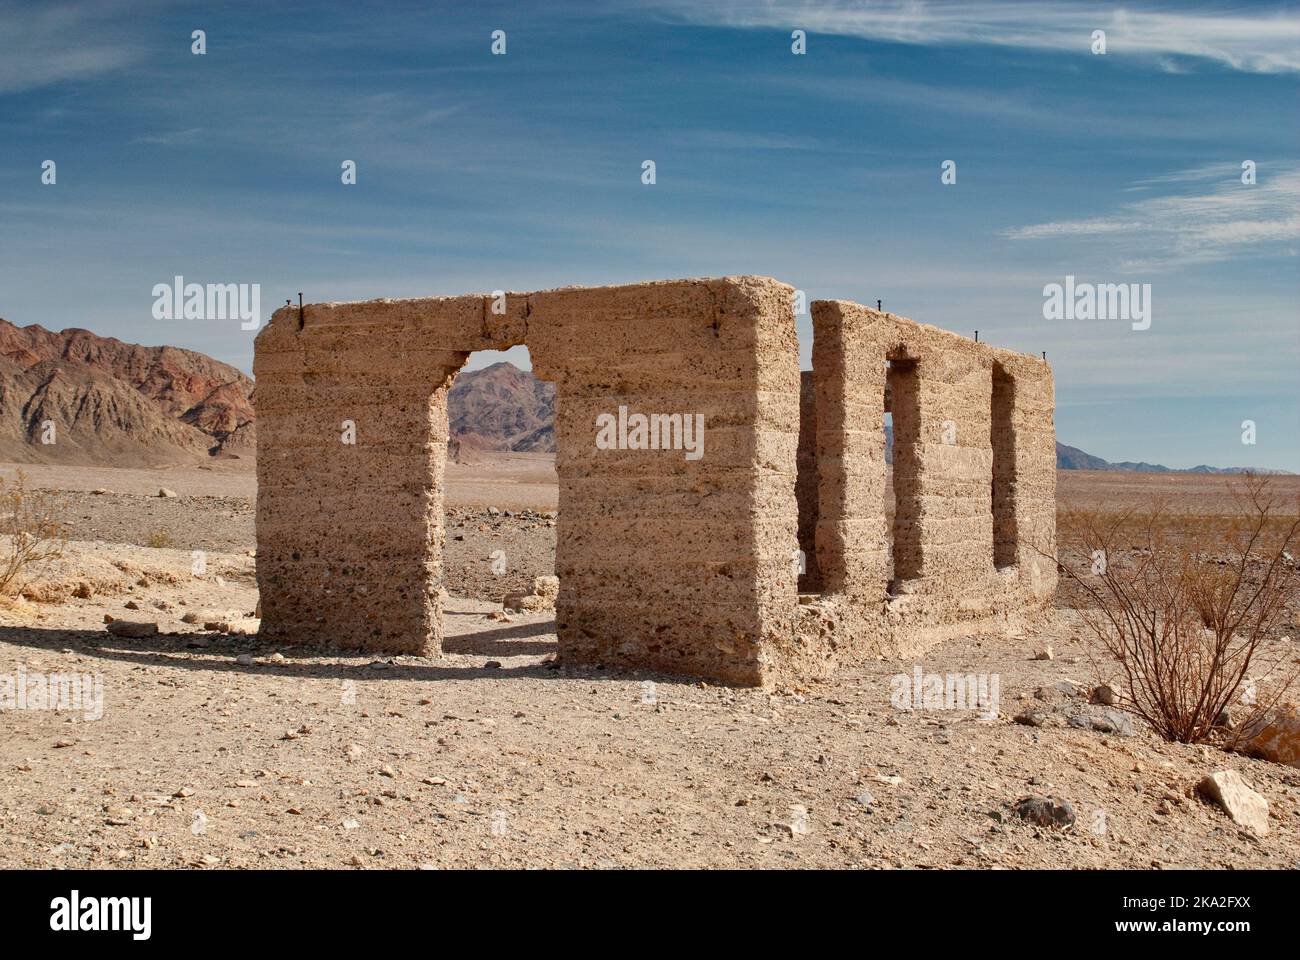 Ashford Mill ruins in Mojave Desert, Death Valley National Park, California, USA Stock Photo